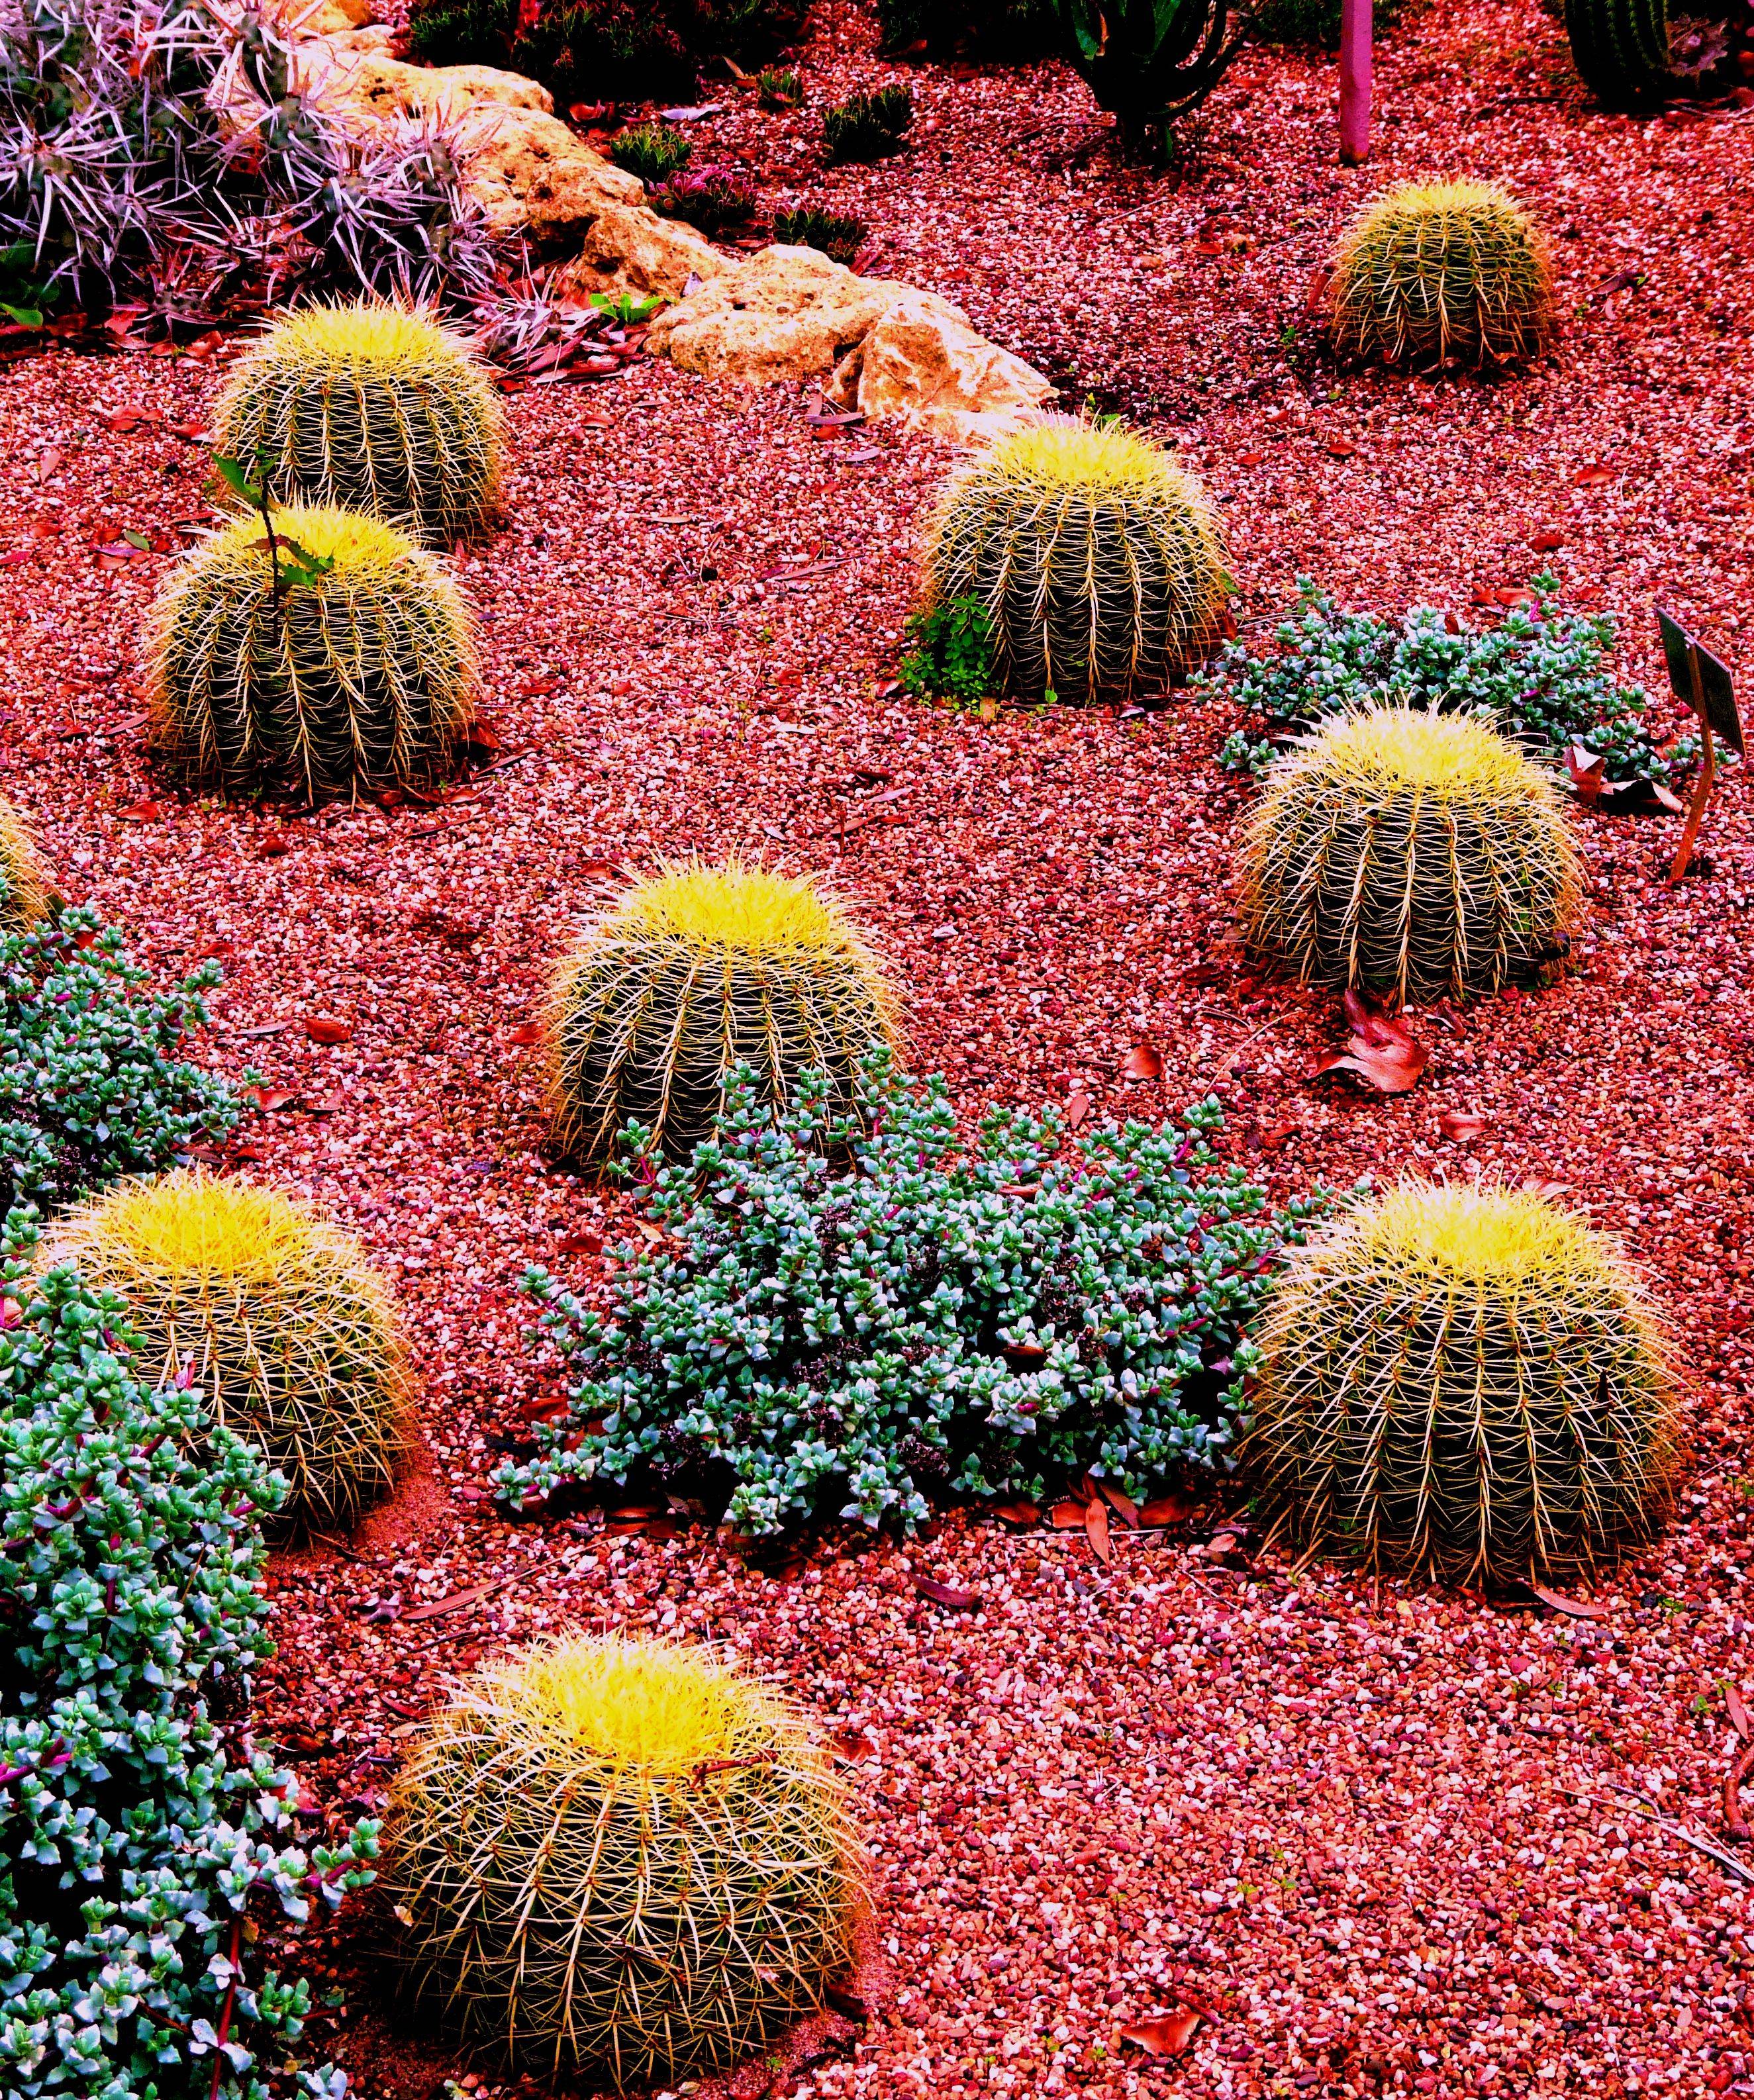 Cactus Gardens